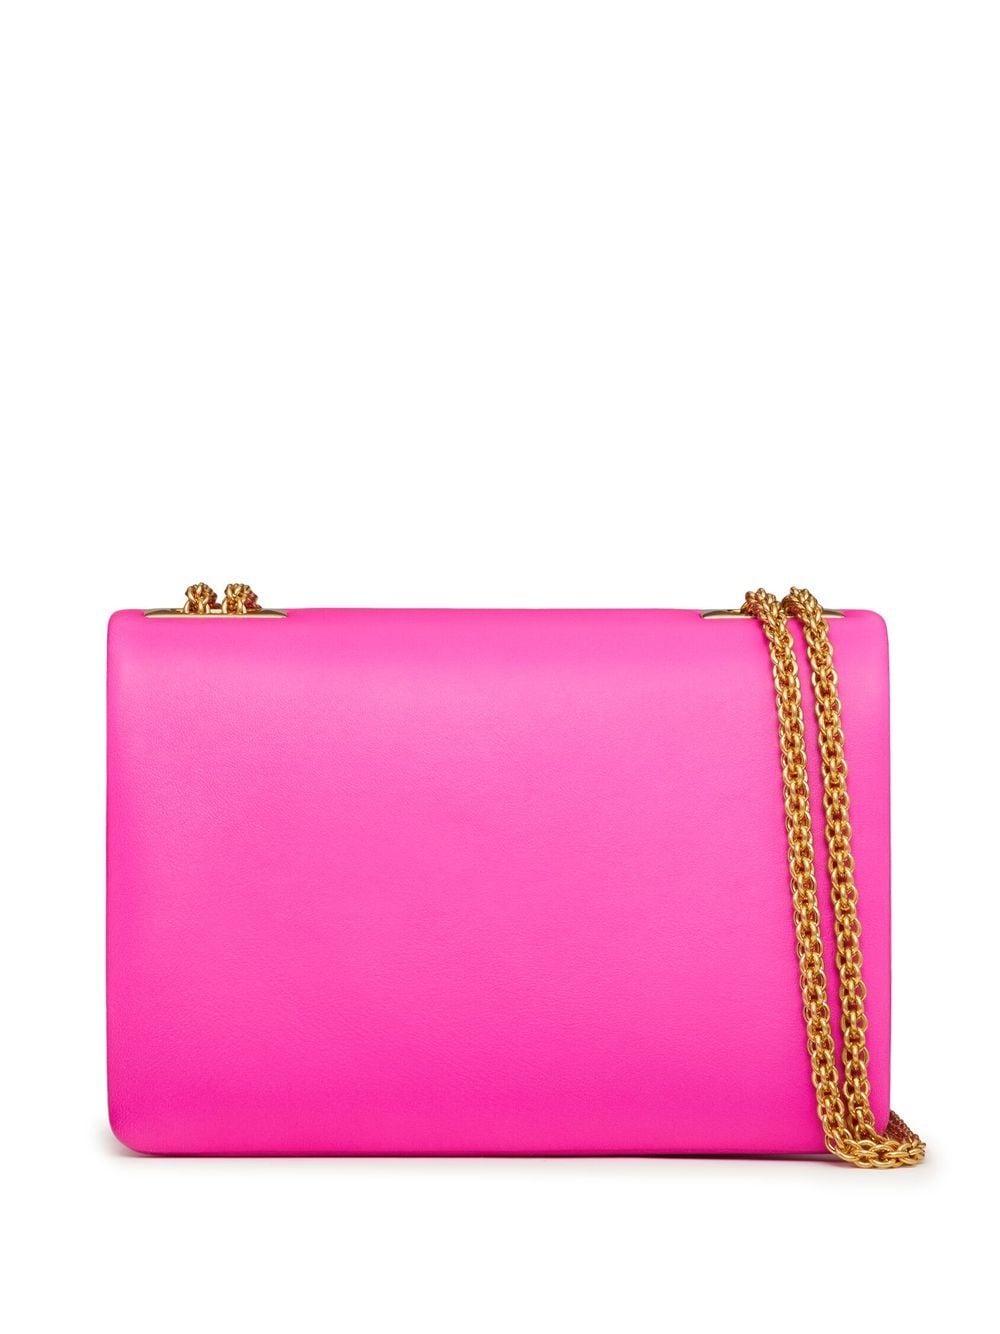 VALENTINO GARAVANI Oversized Pink Lambskin Shoulder Bag with Studded Detail